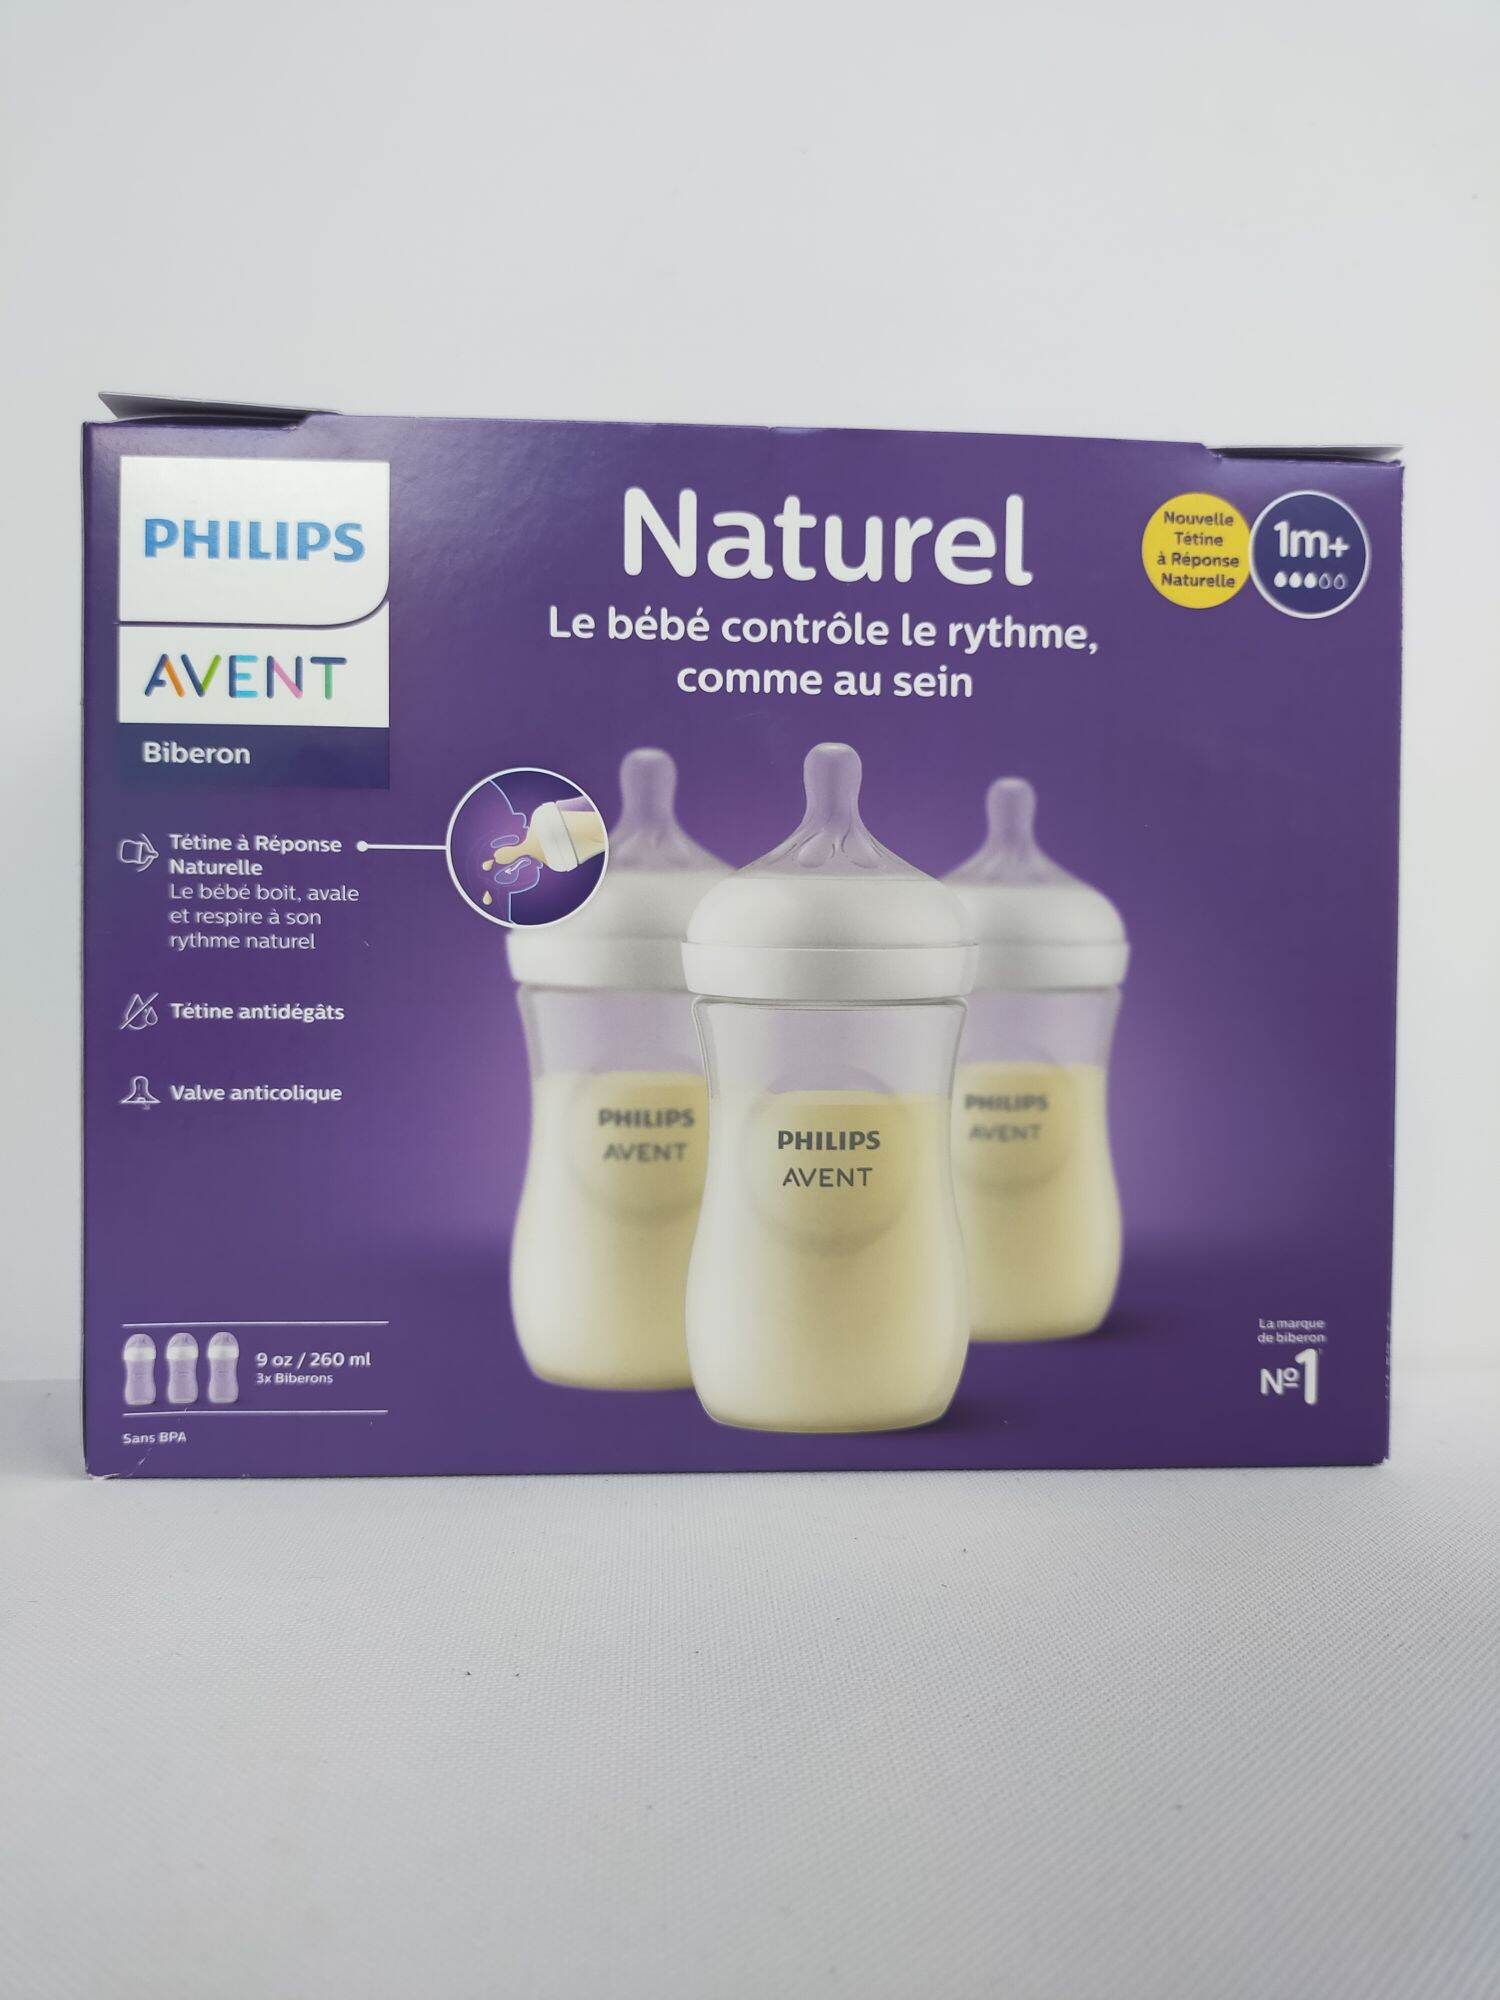 Bình sữa Avent natural 260ml, 330ml của Philips AVENT